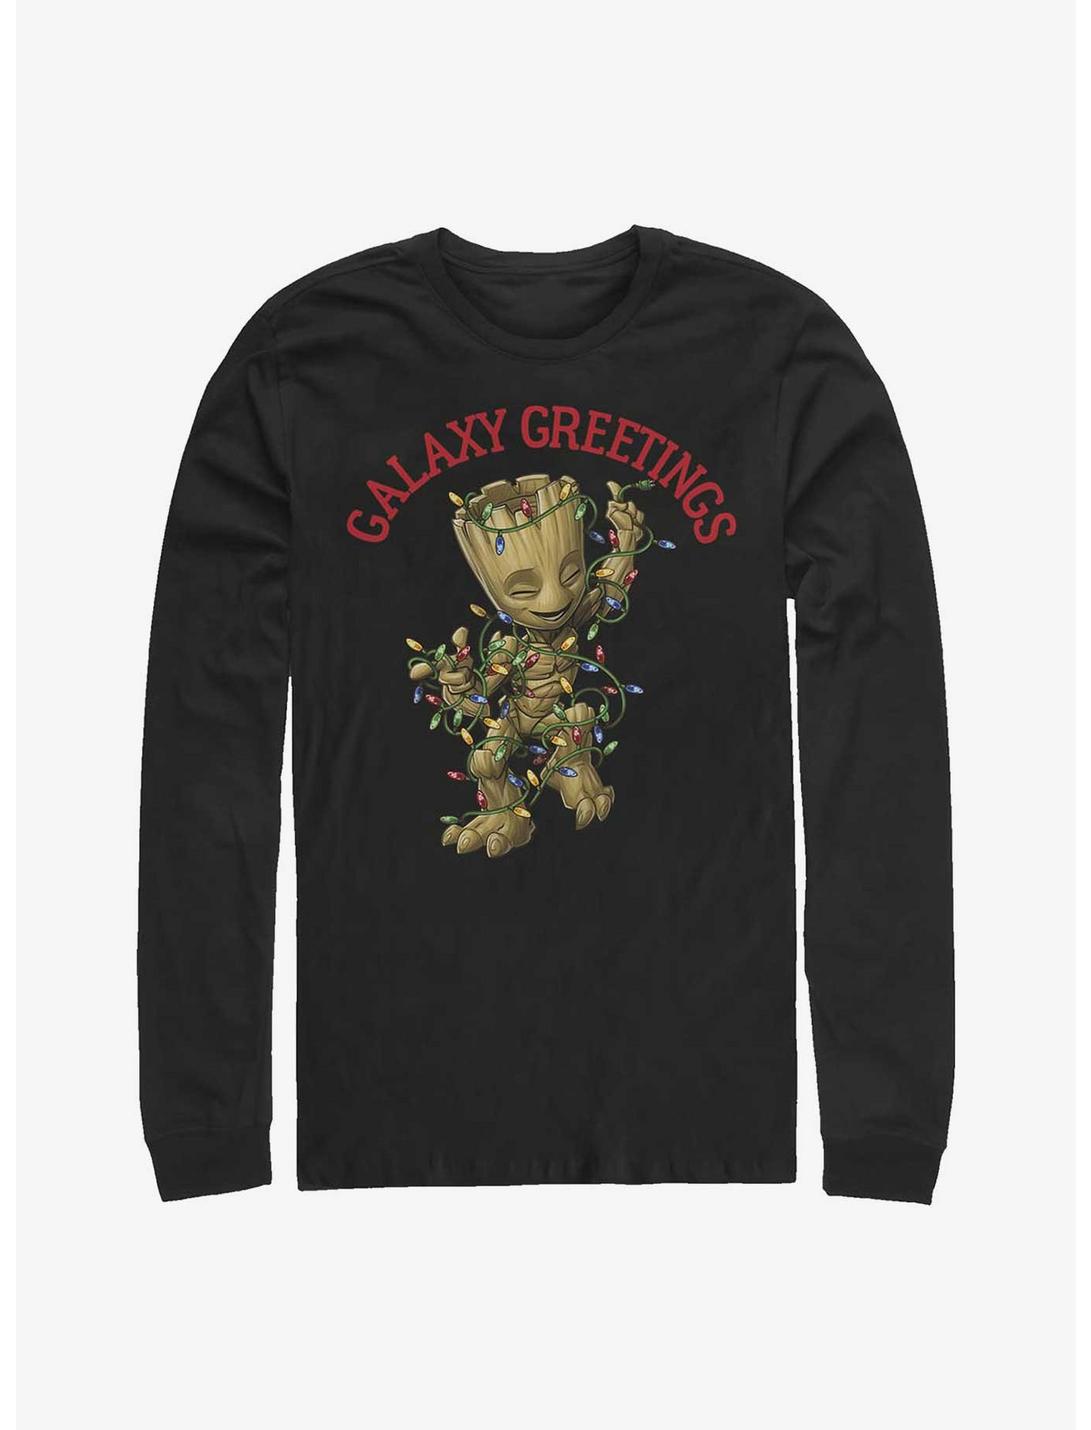 Marvel Galaxy Greetings Baby Groot Long-Sleeve T-Shirt, BLACK, hi-res